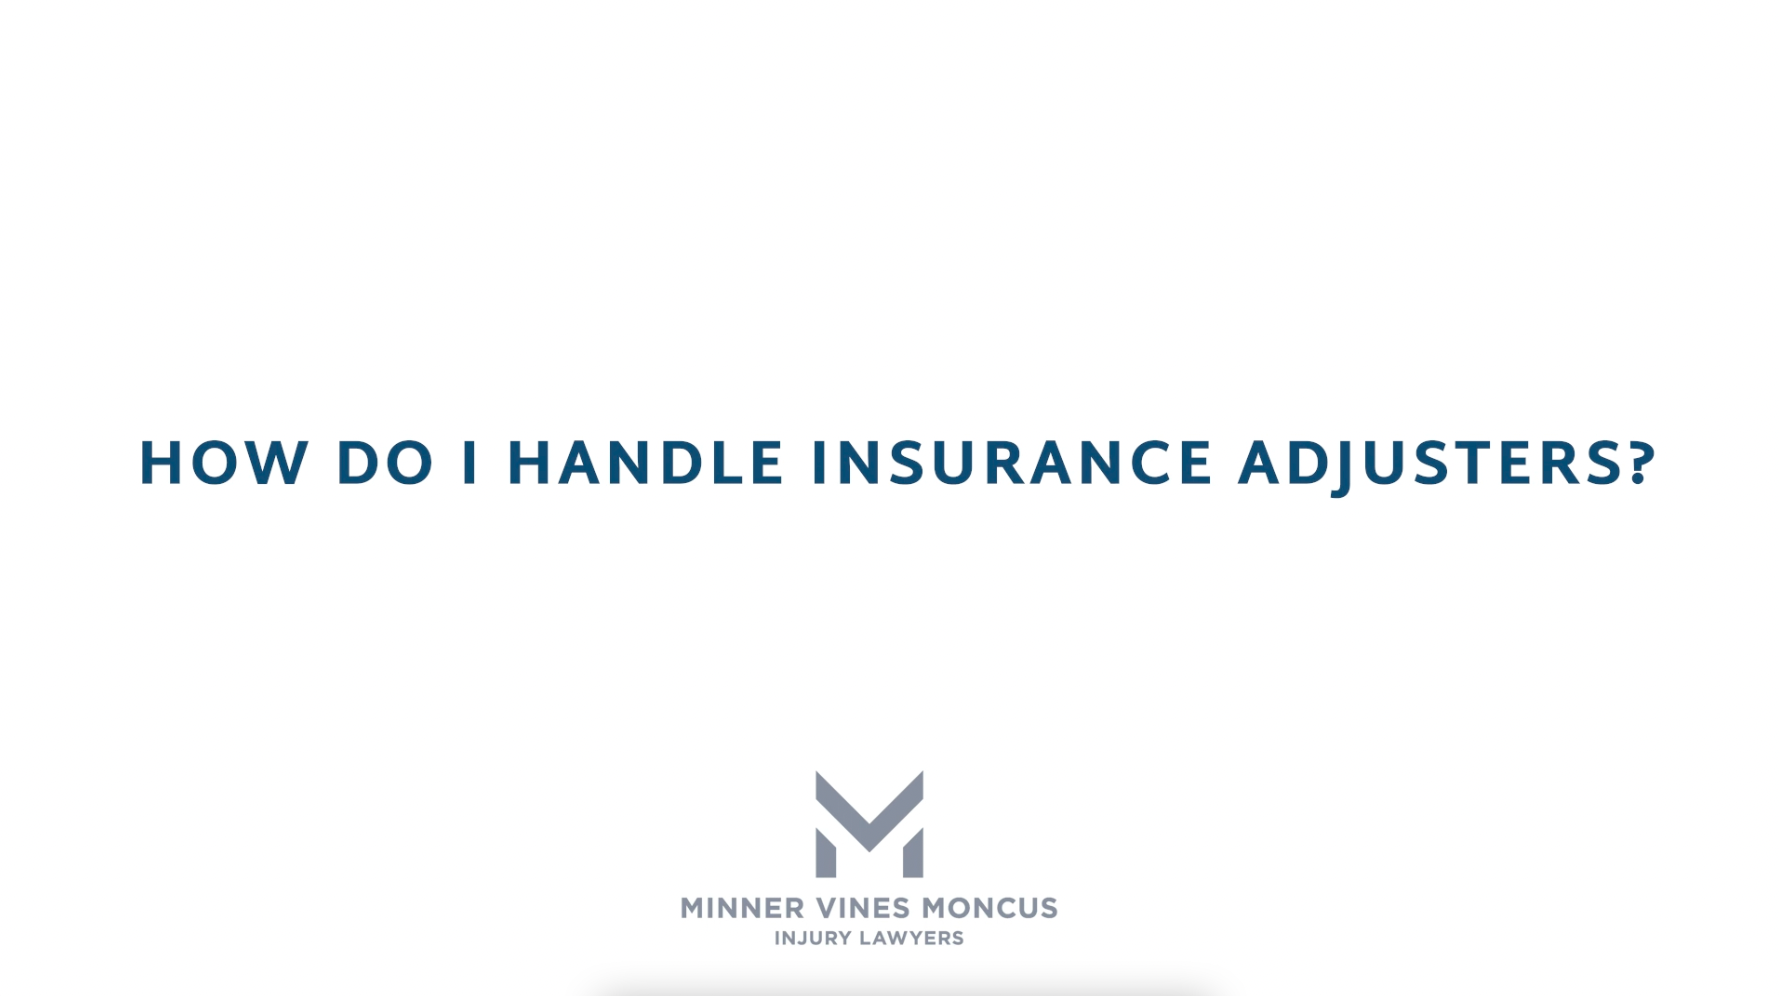 How do I handle insurance adjusters?